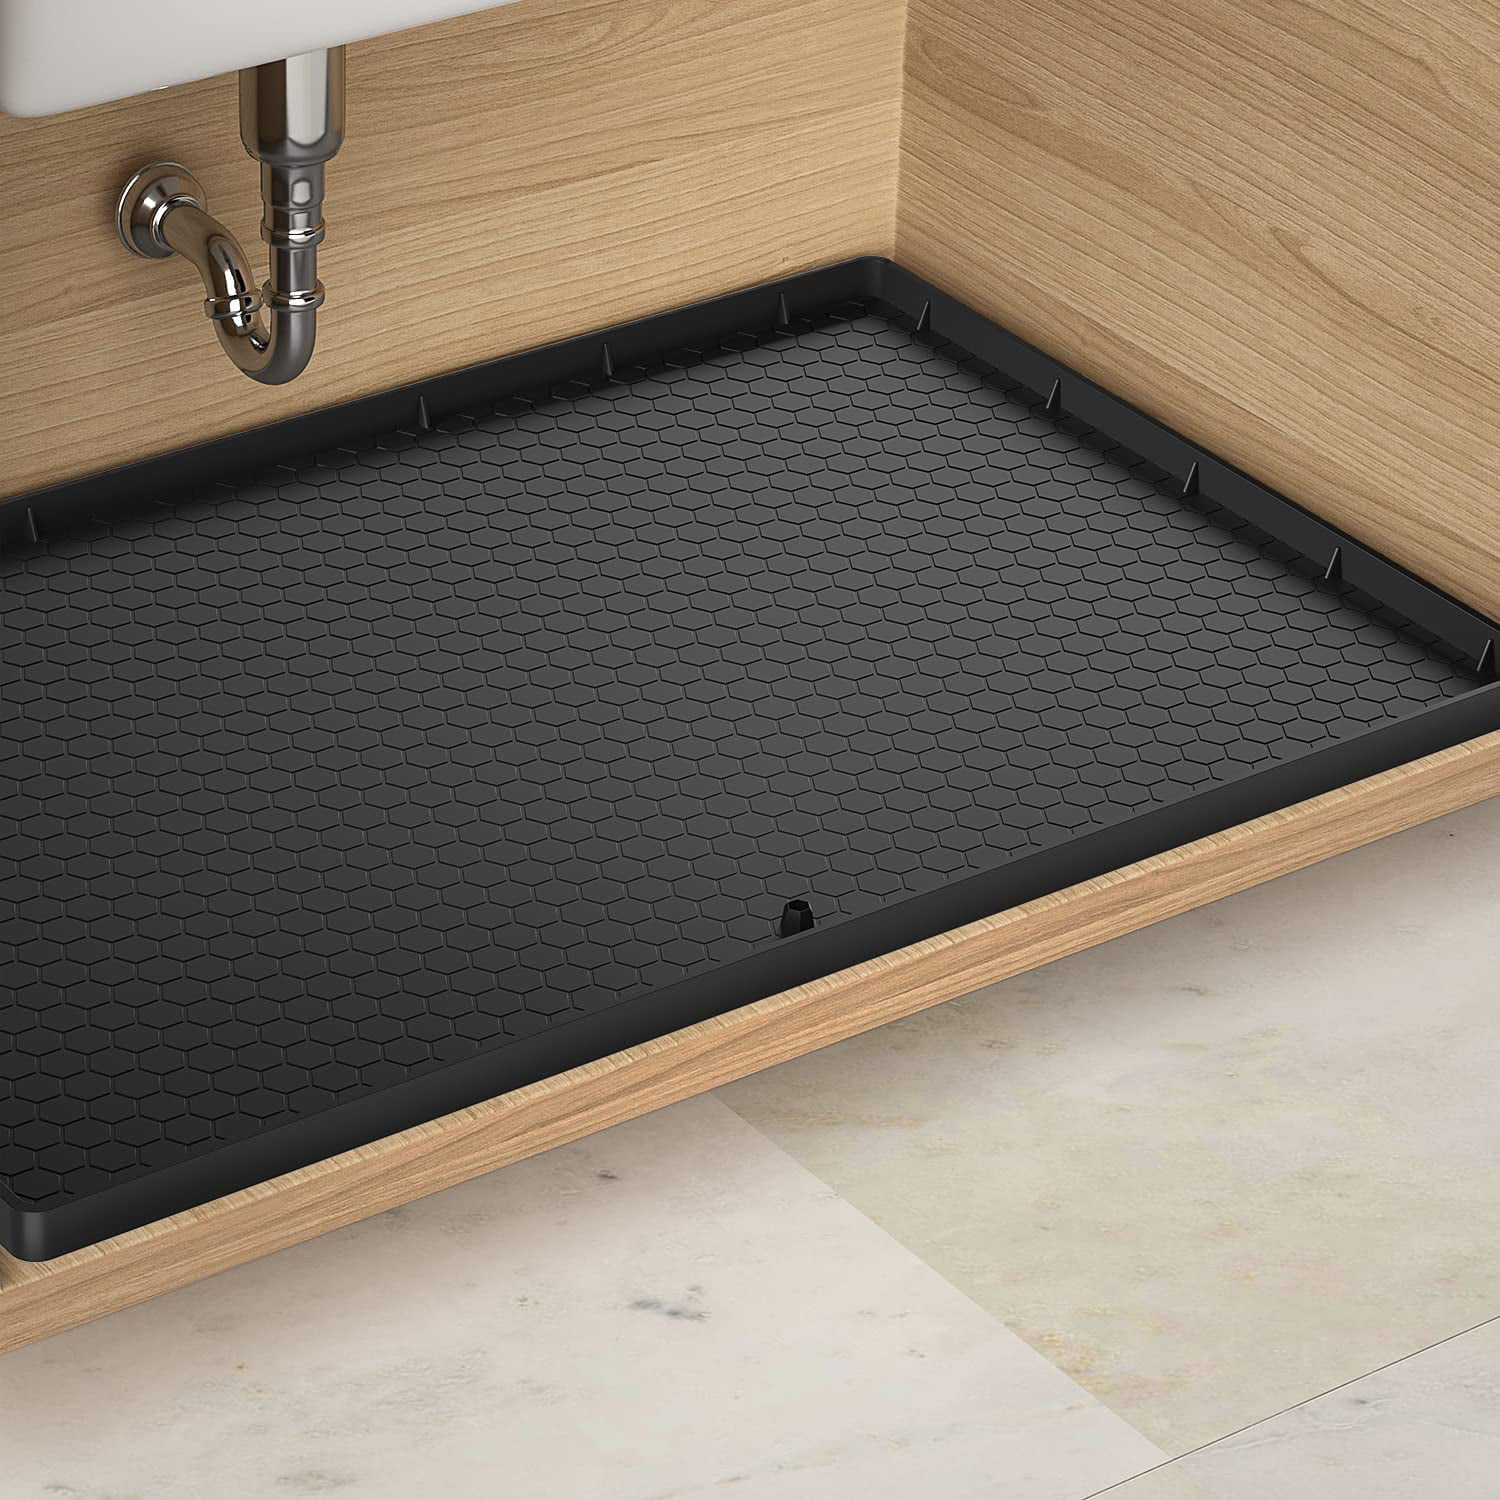 Silicone under Sink Mats for Kitchen 33″ X 22″ Waterproof Sink Mat